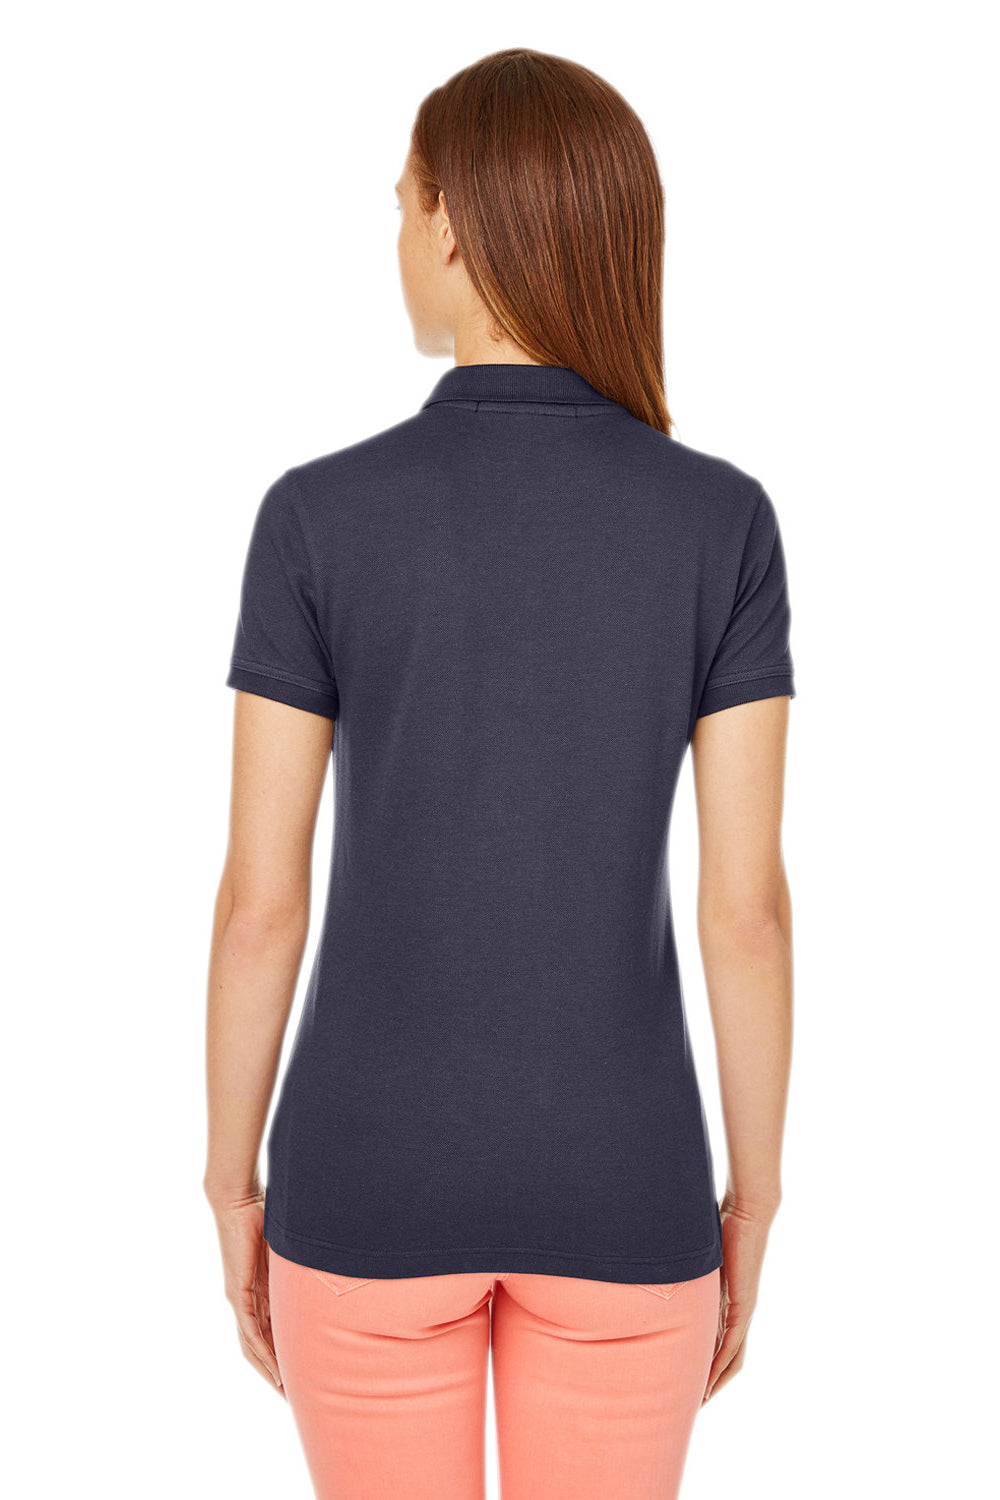 Devon & Jones DG100W Womens New Classics Performance Moisture Wicking Short Sleeve Polo Shirt Navy Blue Back